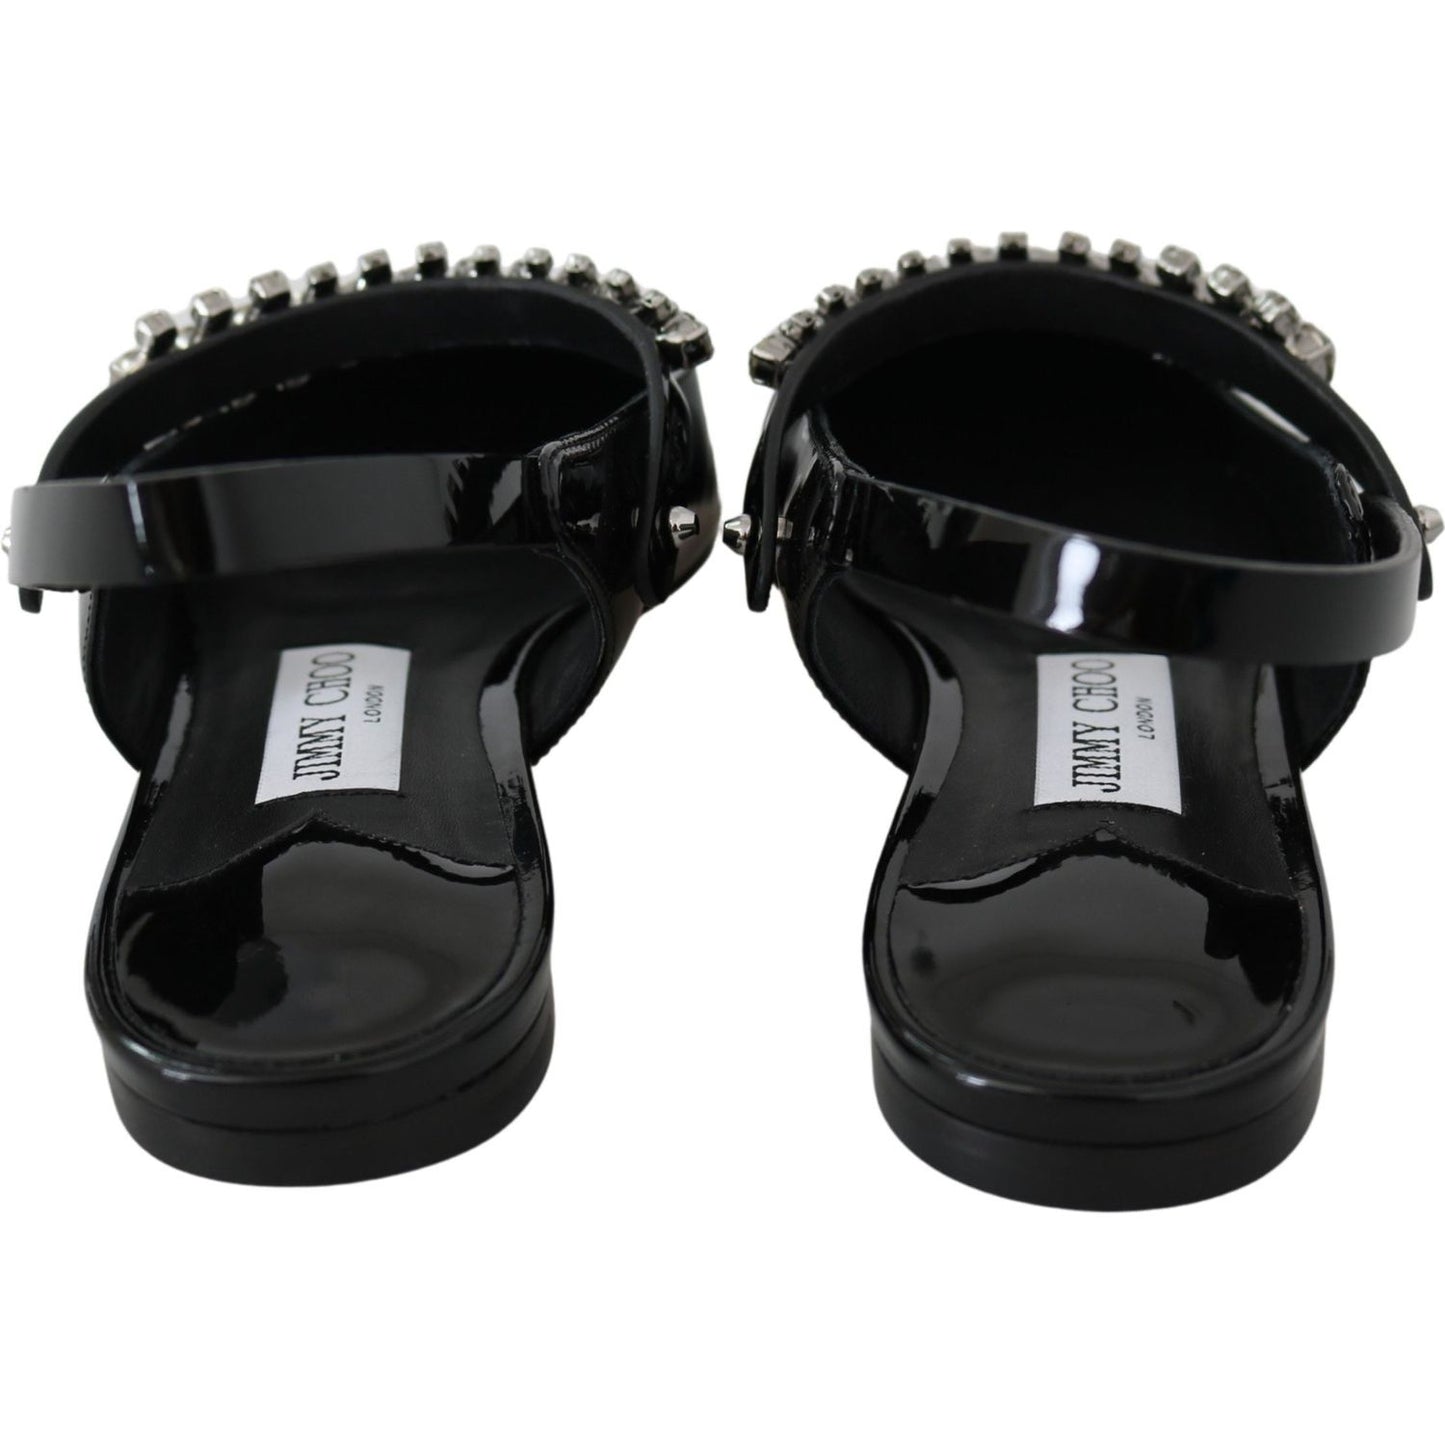 Jimmy Choo Elegant Black Patent Flats with Crystal Accent mahdis-flat-black-patent-flat-shoes